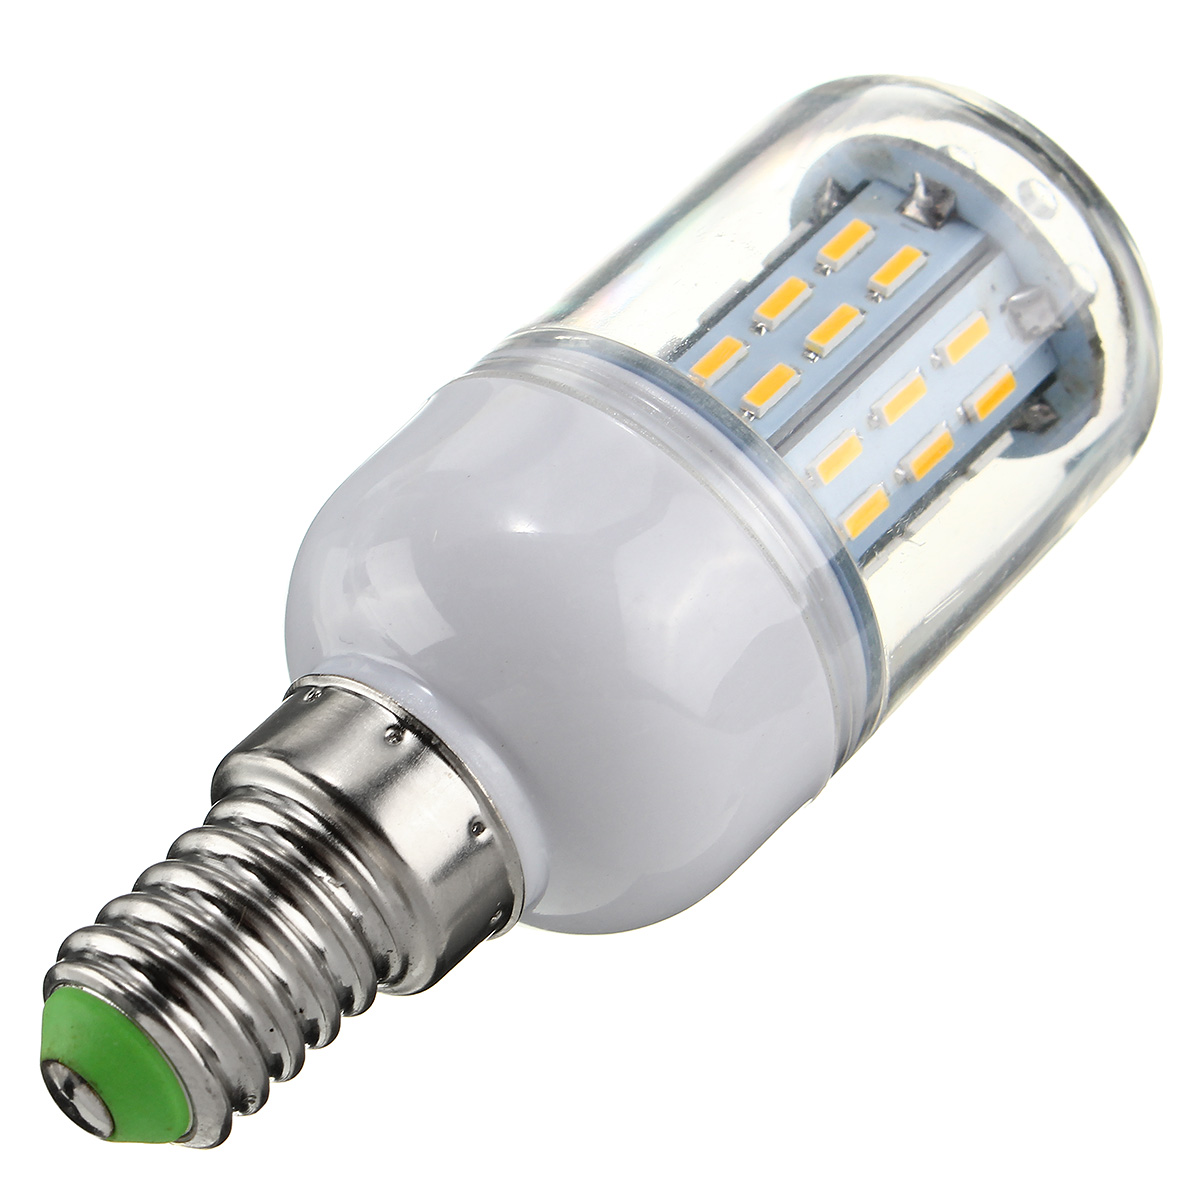 Dimmable-E27-E14-E12-B22-GU10-G9-SMD4014-4W-LED-Corn-Bulb-Light-Lamp-AC110V-1126662-7